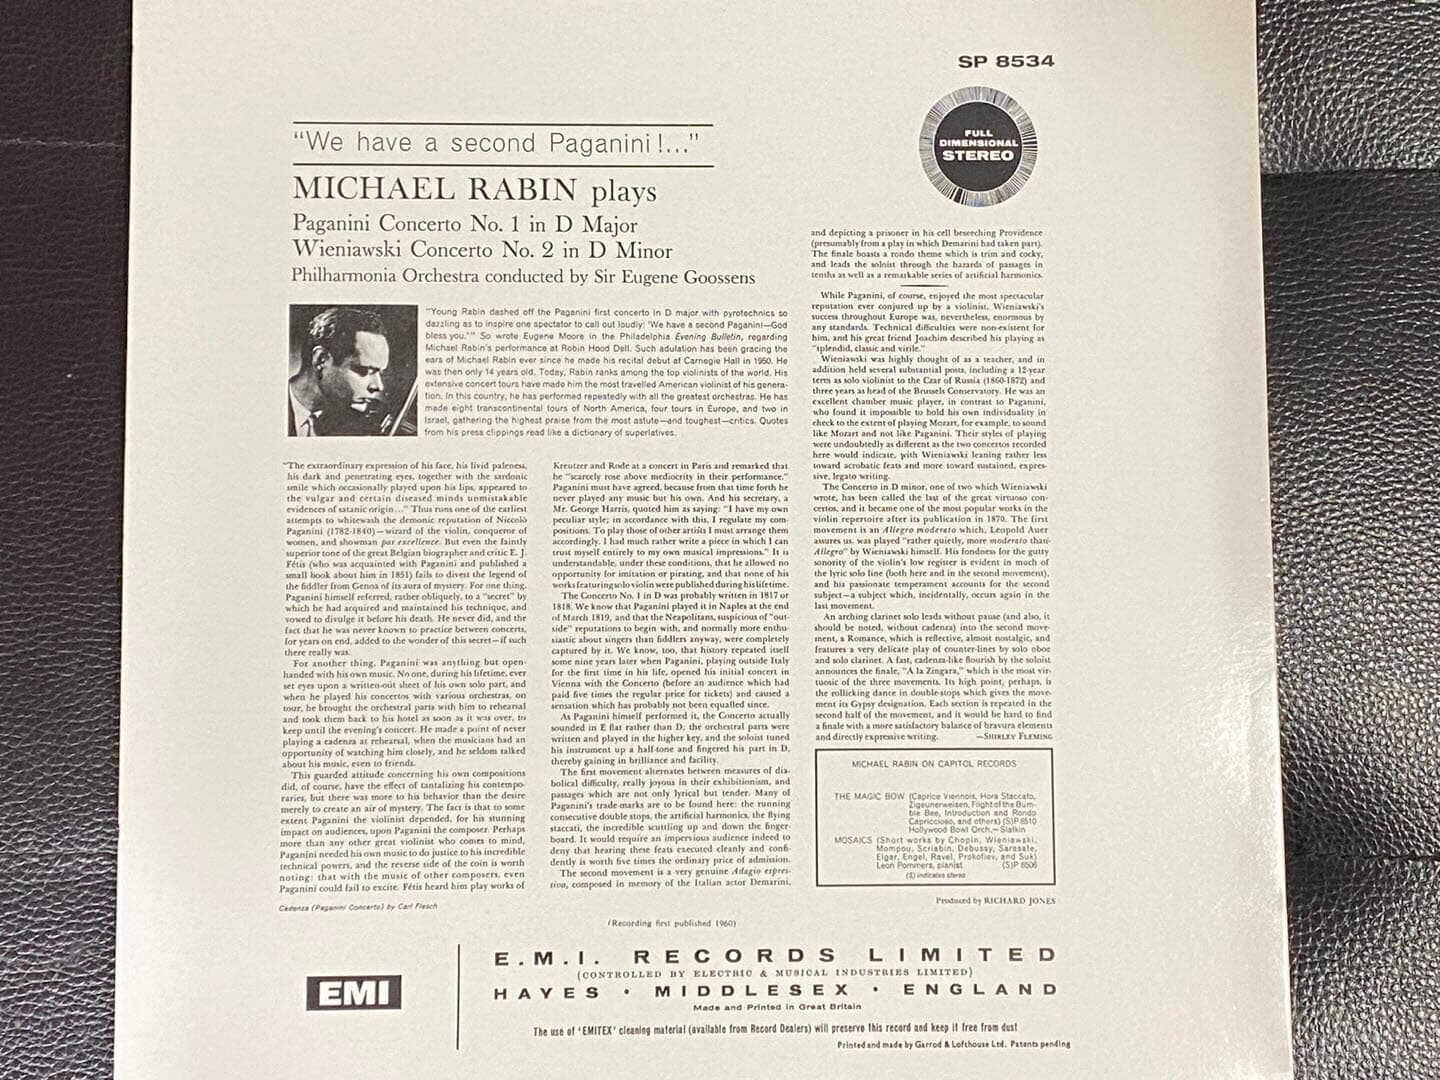 [LP] 마이클 라빈 - Michael Rabin - Paganini Wieniawski Violin Concertos LP [U.K반]